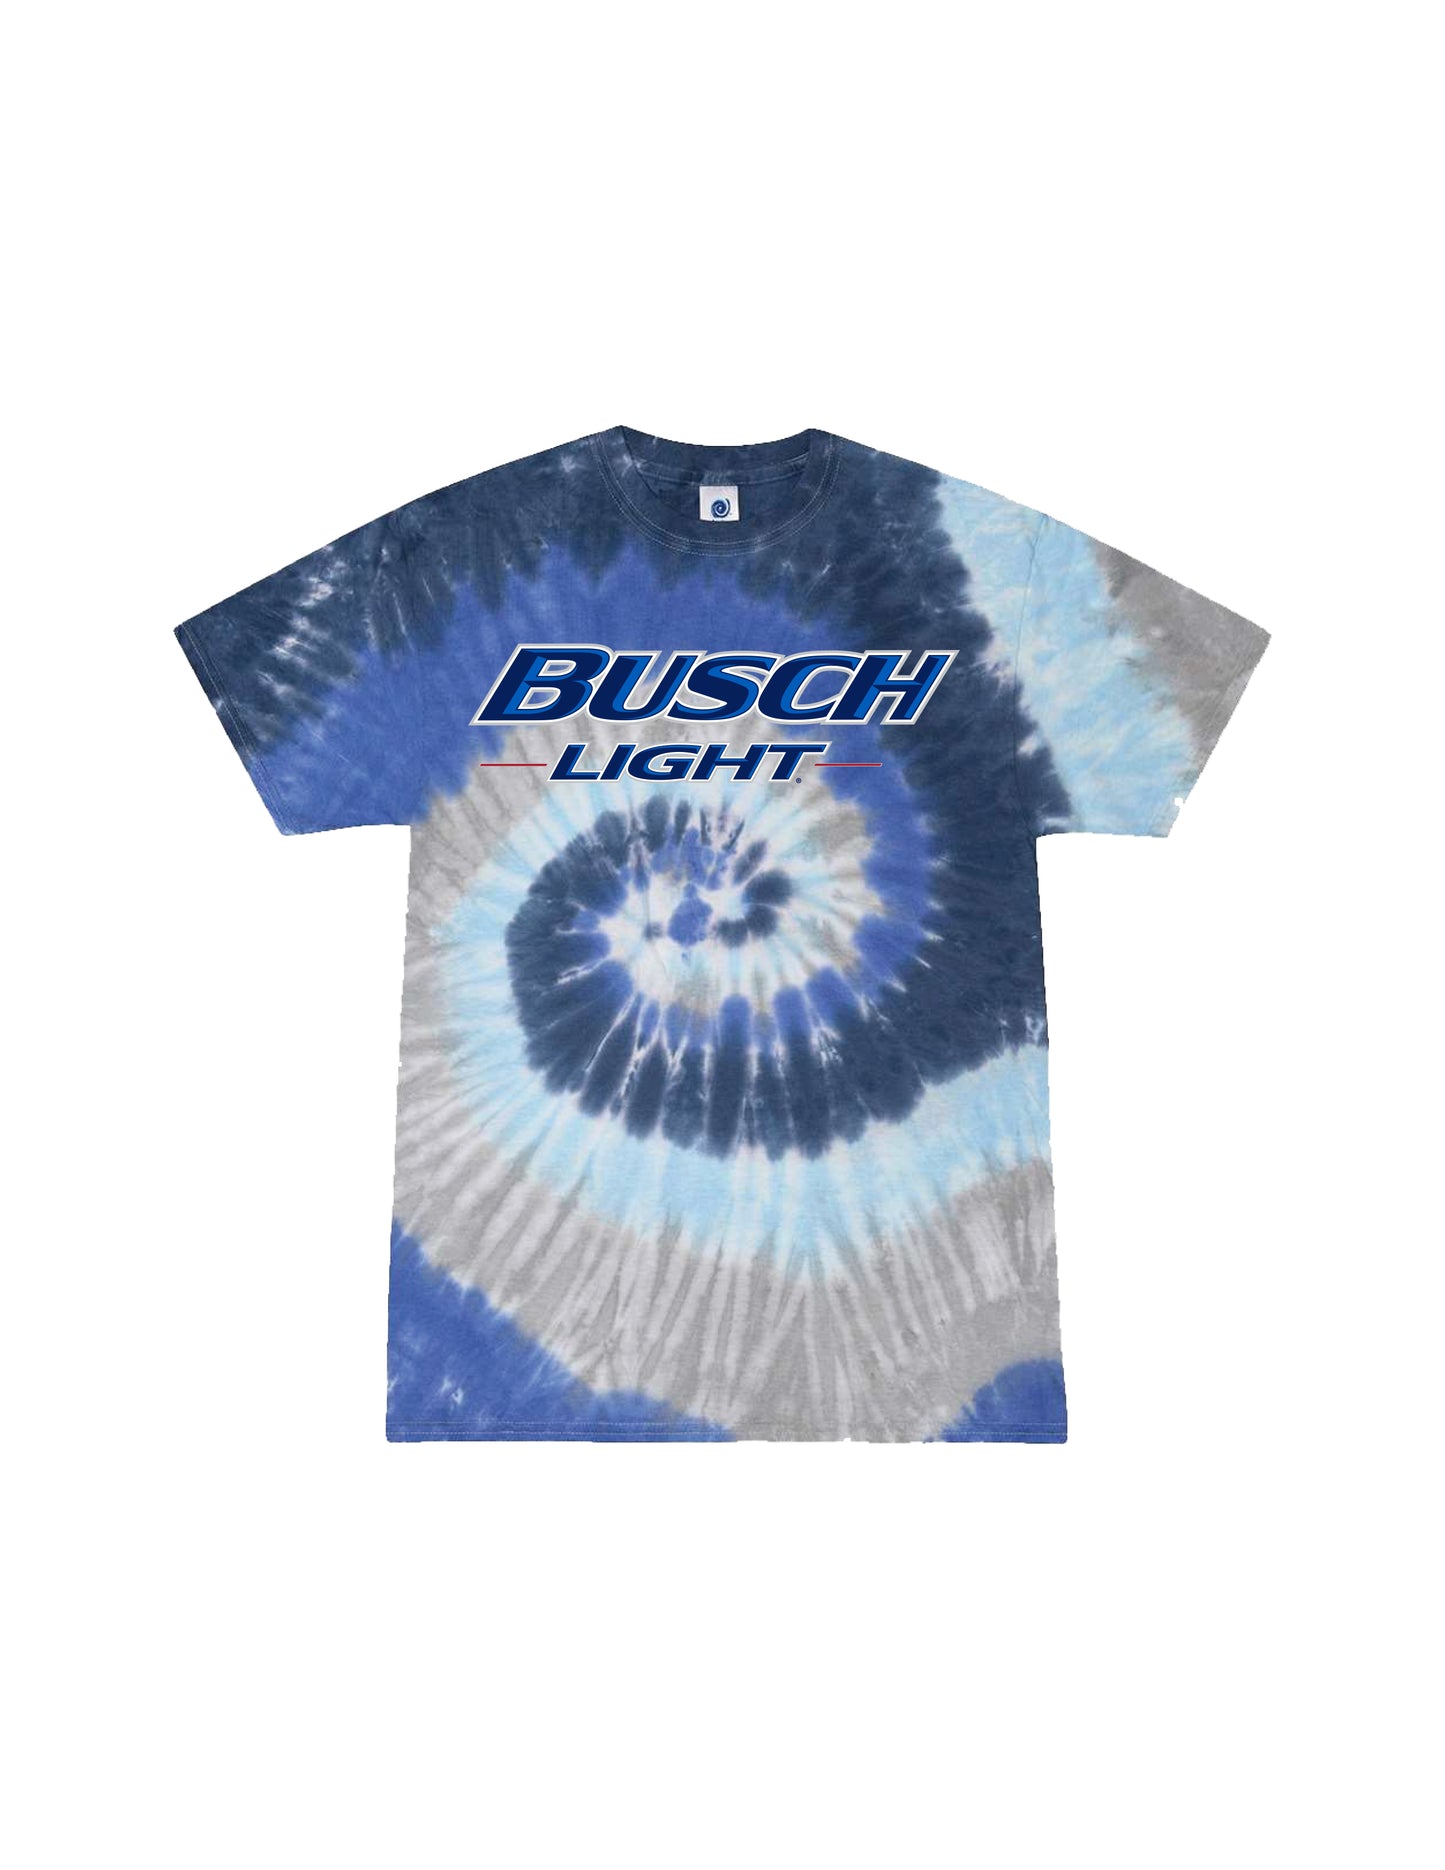 Ross Chastain Busch Light Throwback Tie Dye Tee